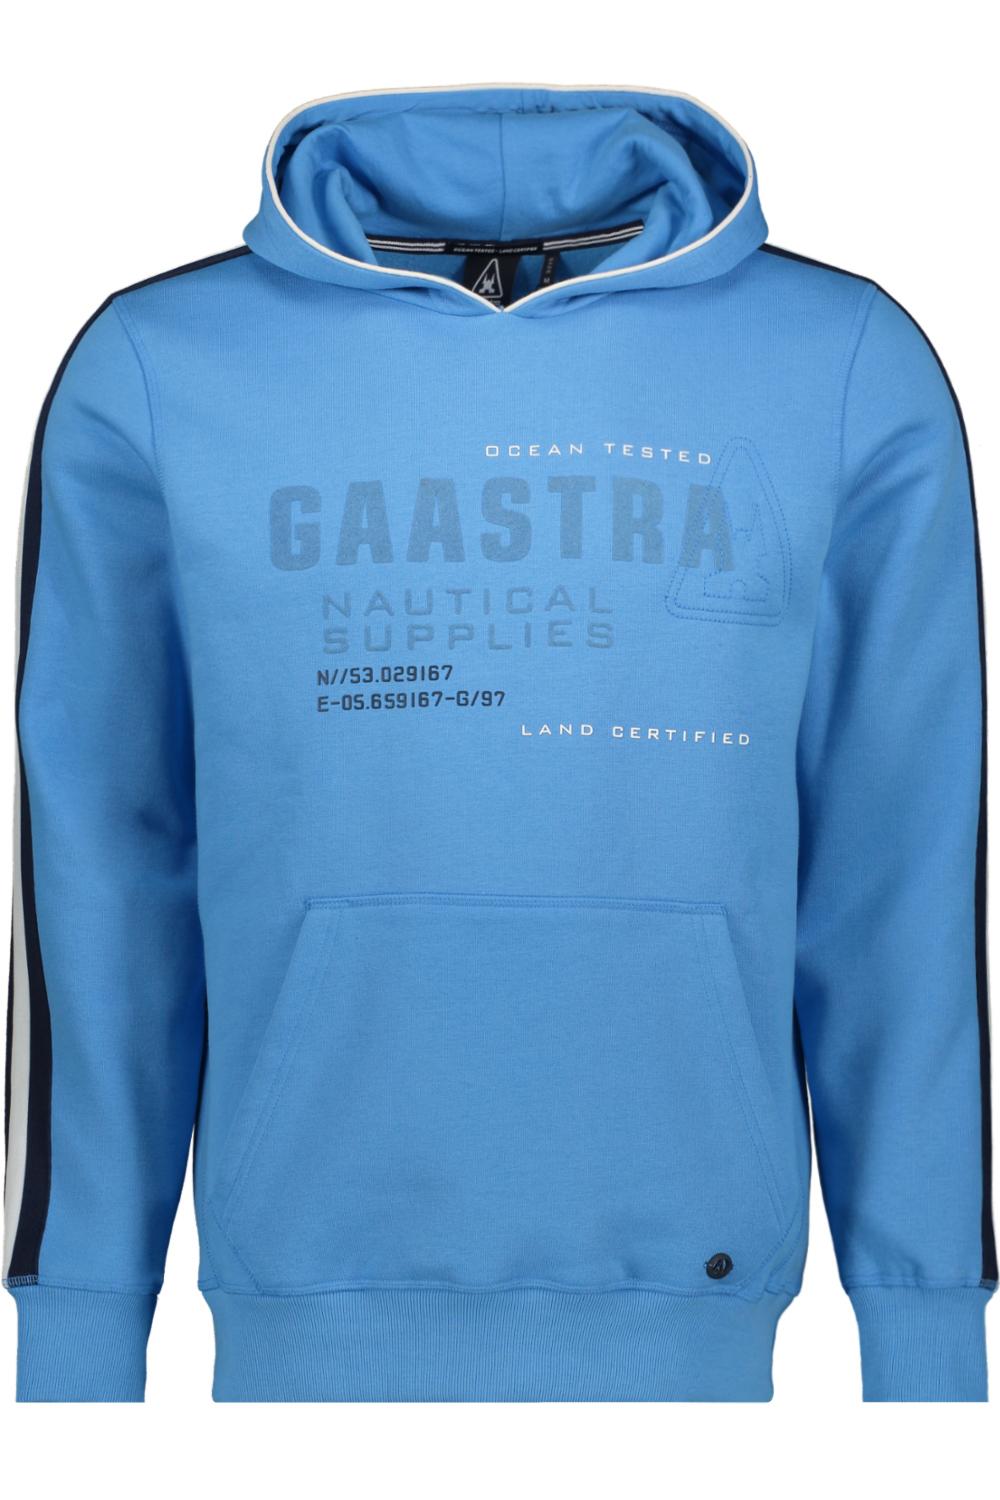 Traditioneel voorstel Vrijwillig arc m 355301231 gaastra sweater b025 azure-blue